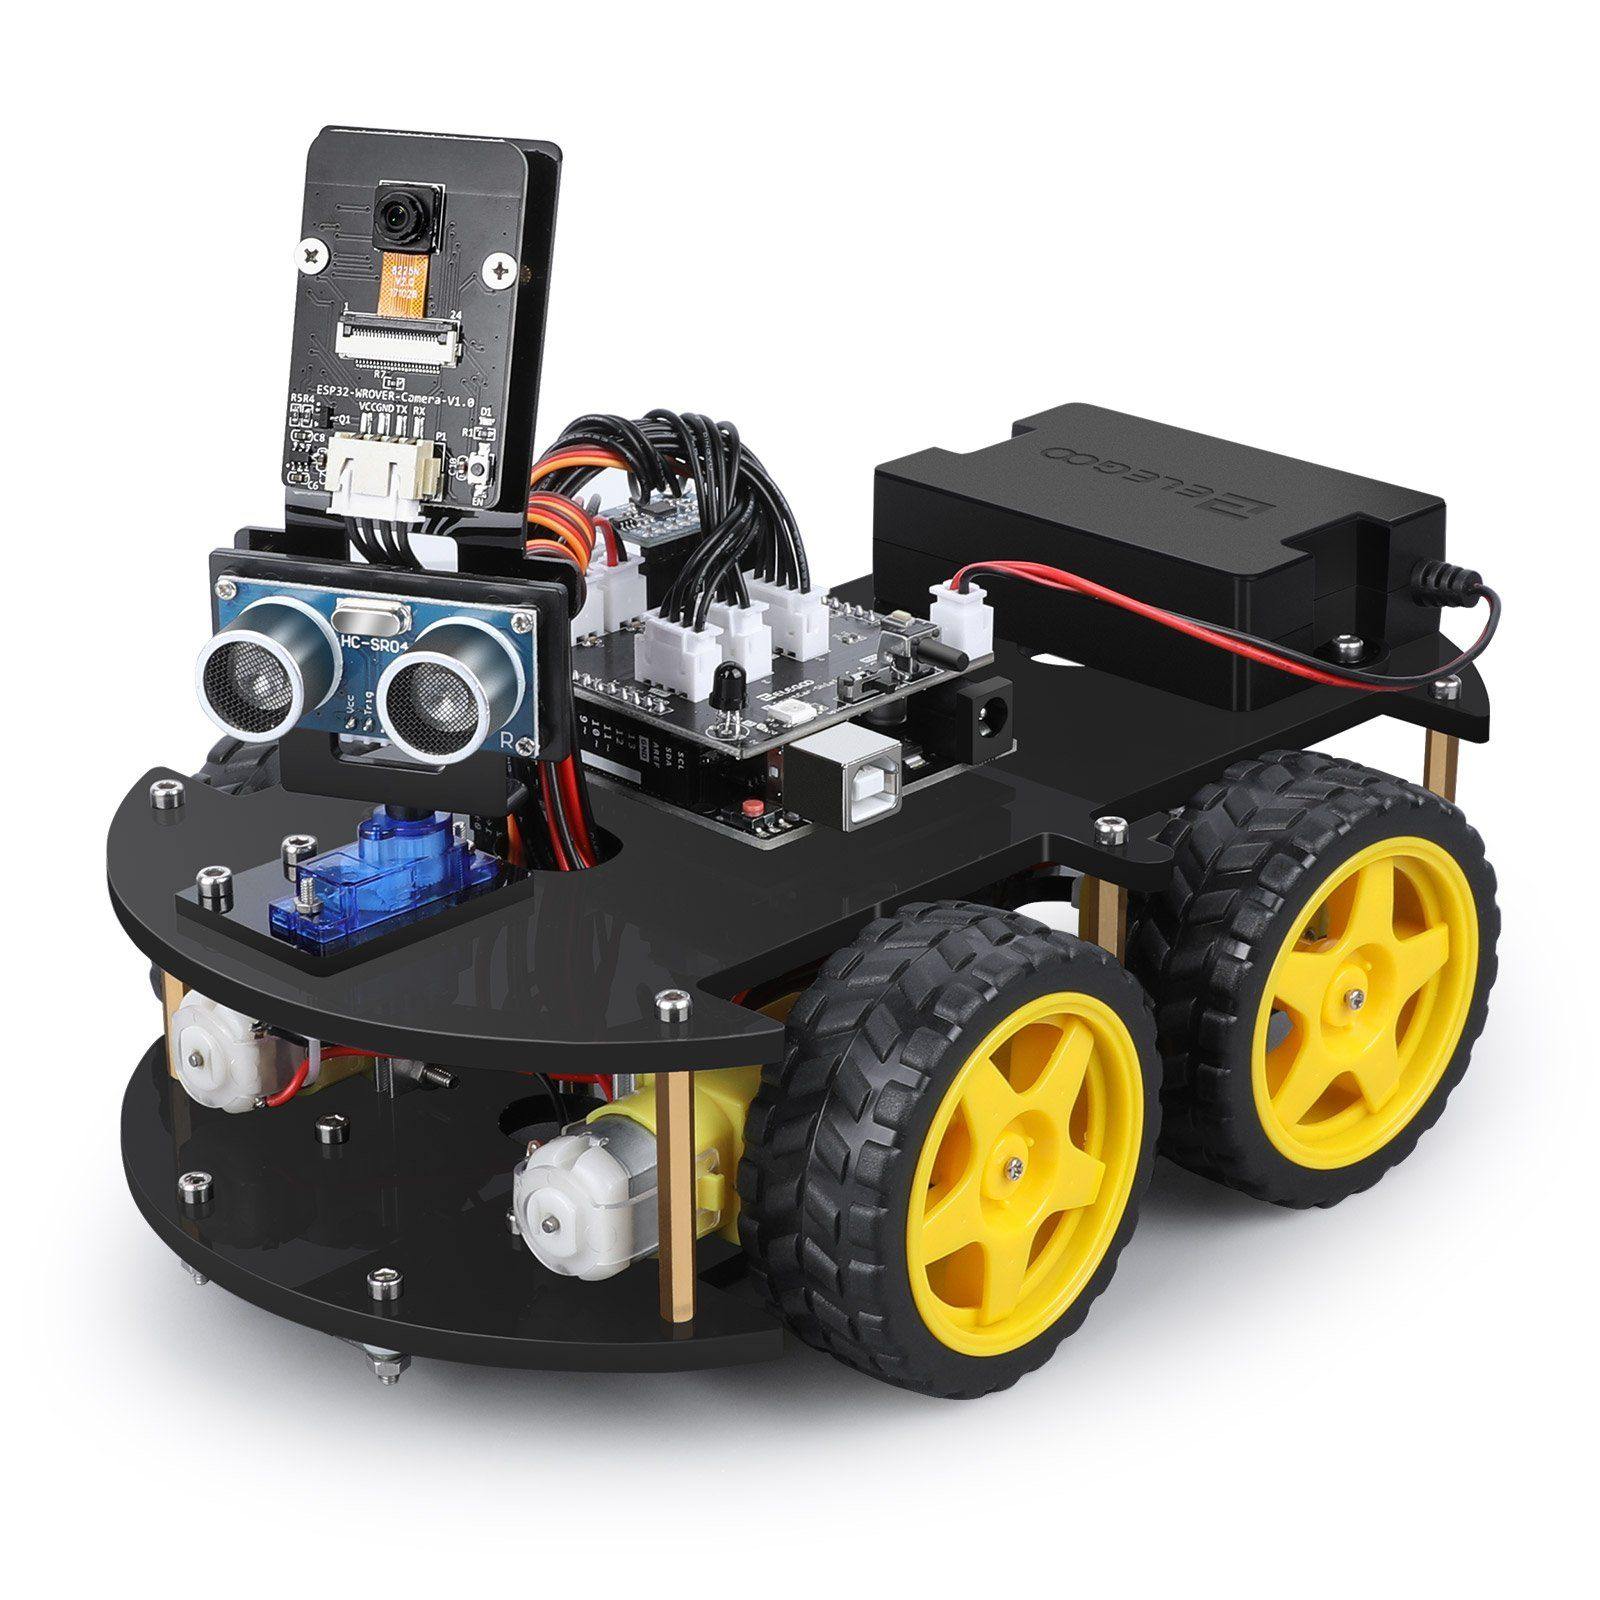 JOUET ROBOT ÉDUCATIF programmation - Xtrem Bots EUR 80,00